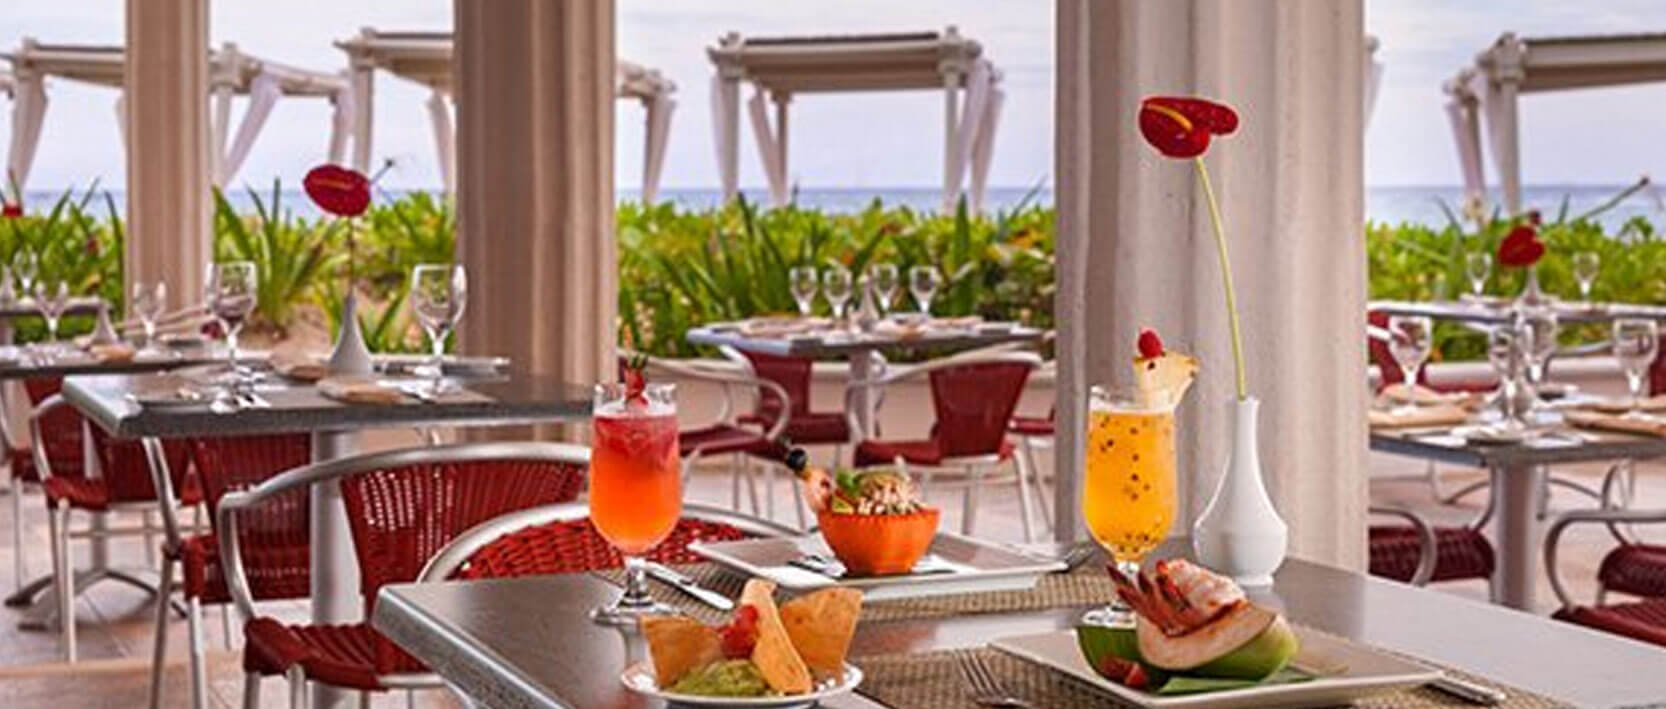 The Royal Playa Del Carmen Restaurants and Bars - Pelicanos